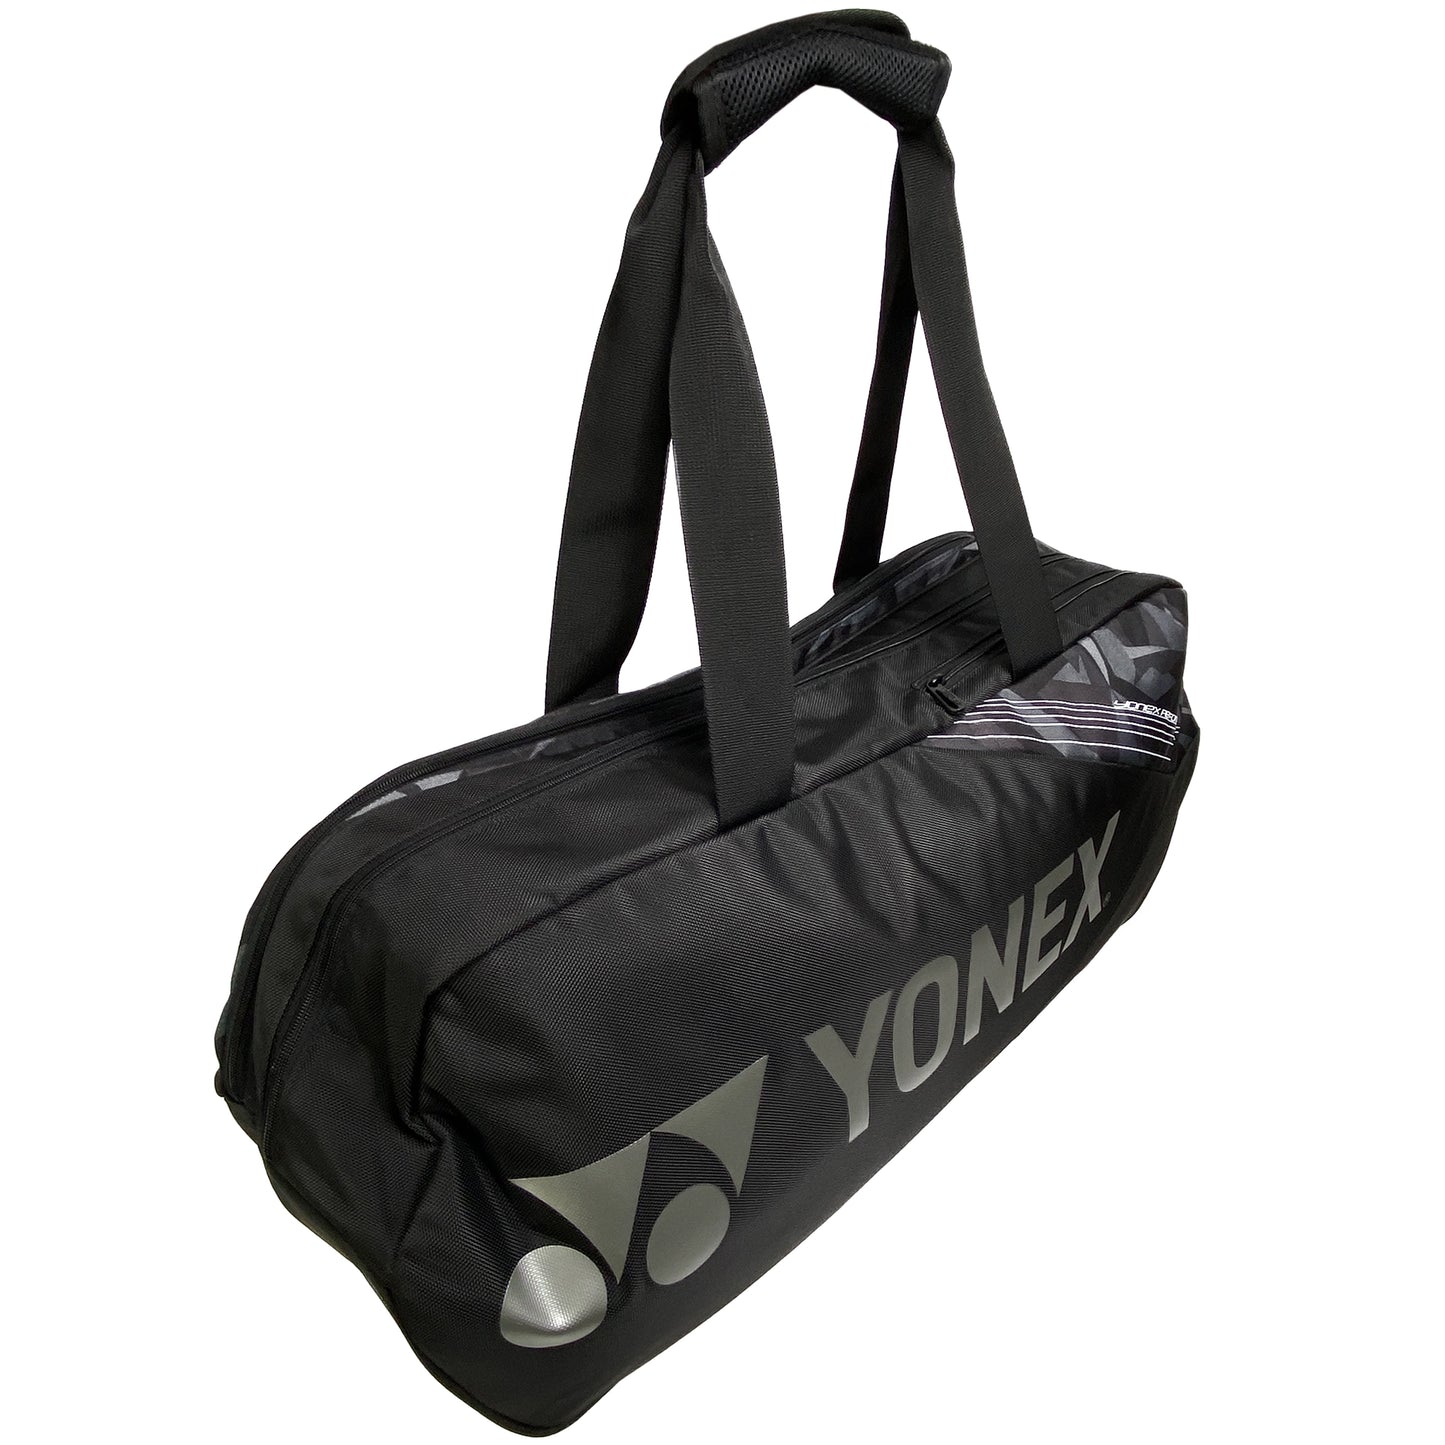 Yonex Pro Tournament Bag (92231WEX) Black